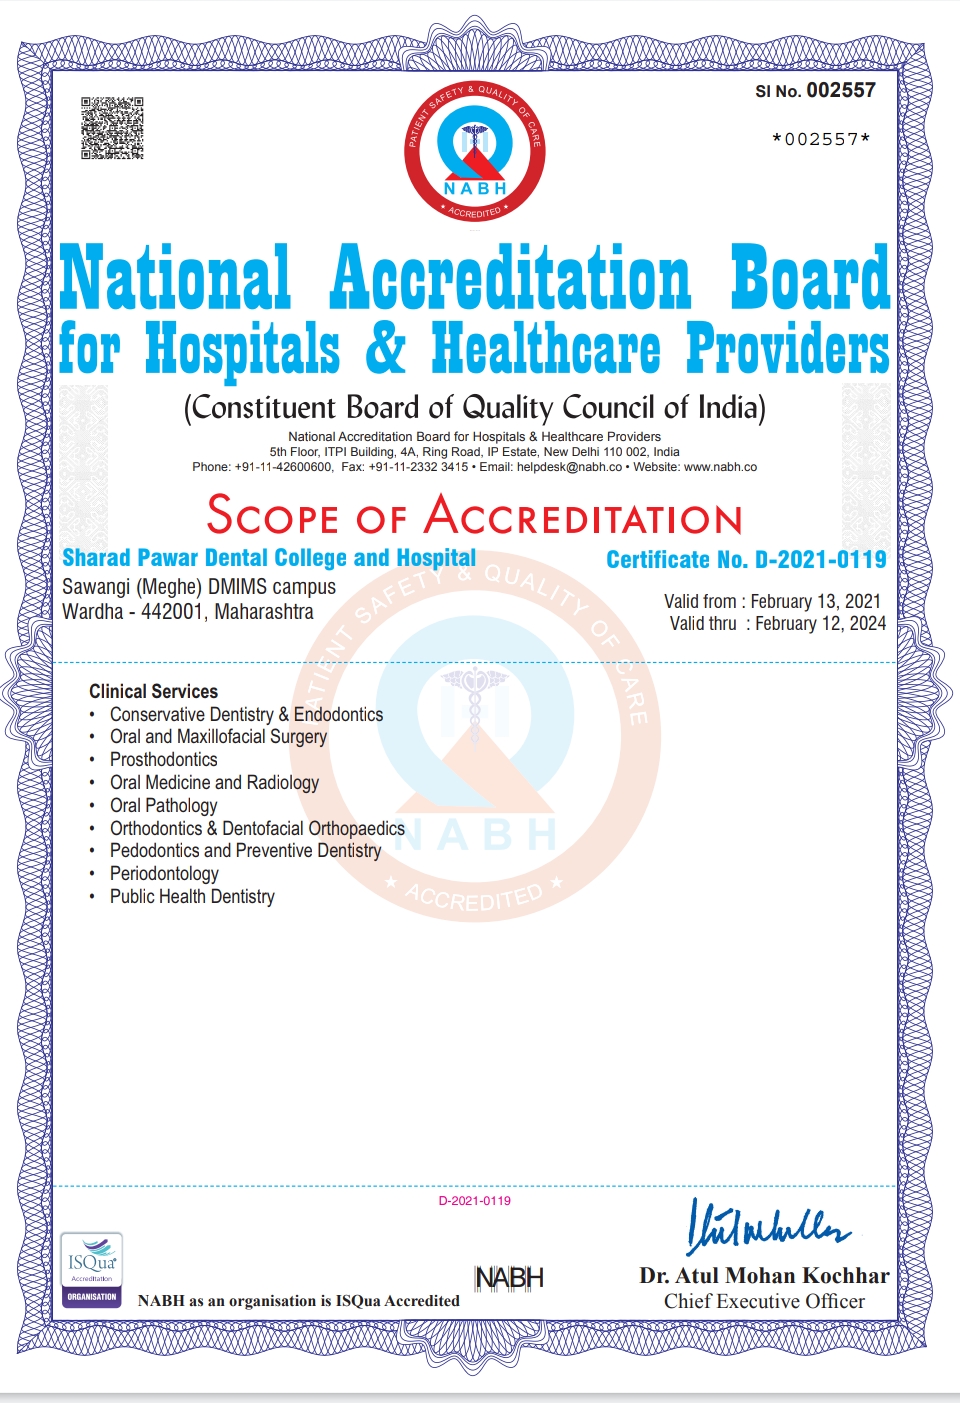 NABH Accreditation for Sharad Pawar Dental College & Hospital